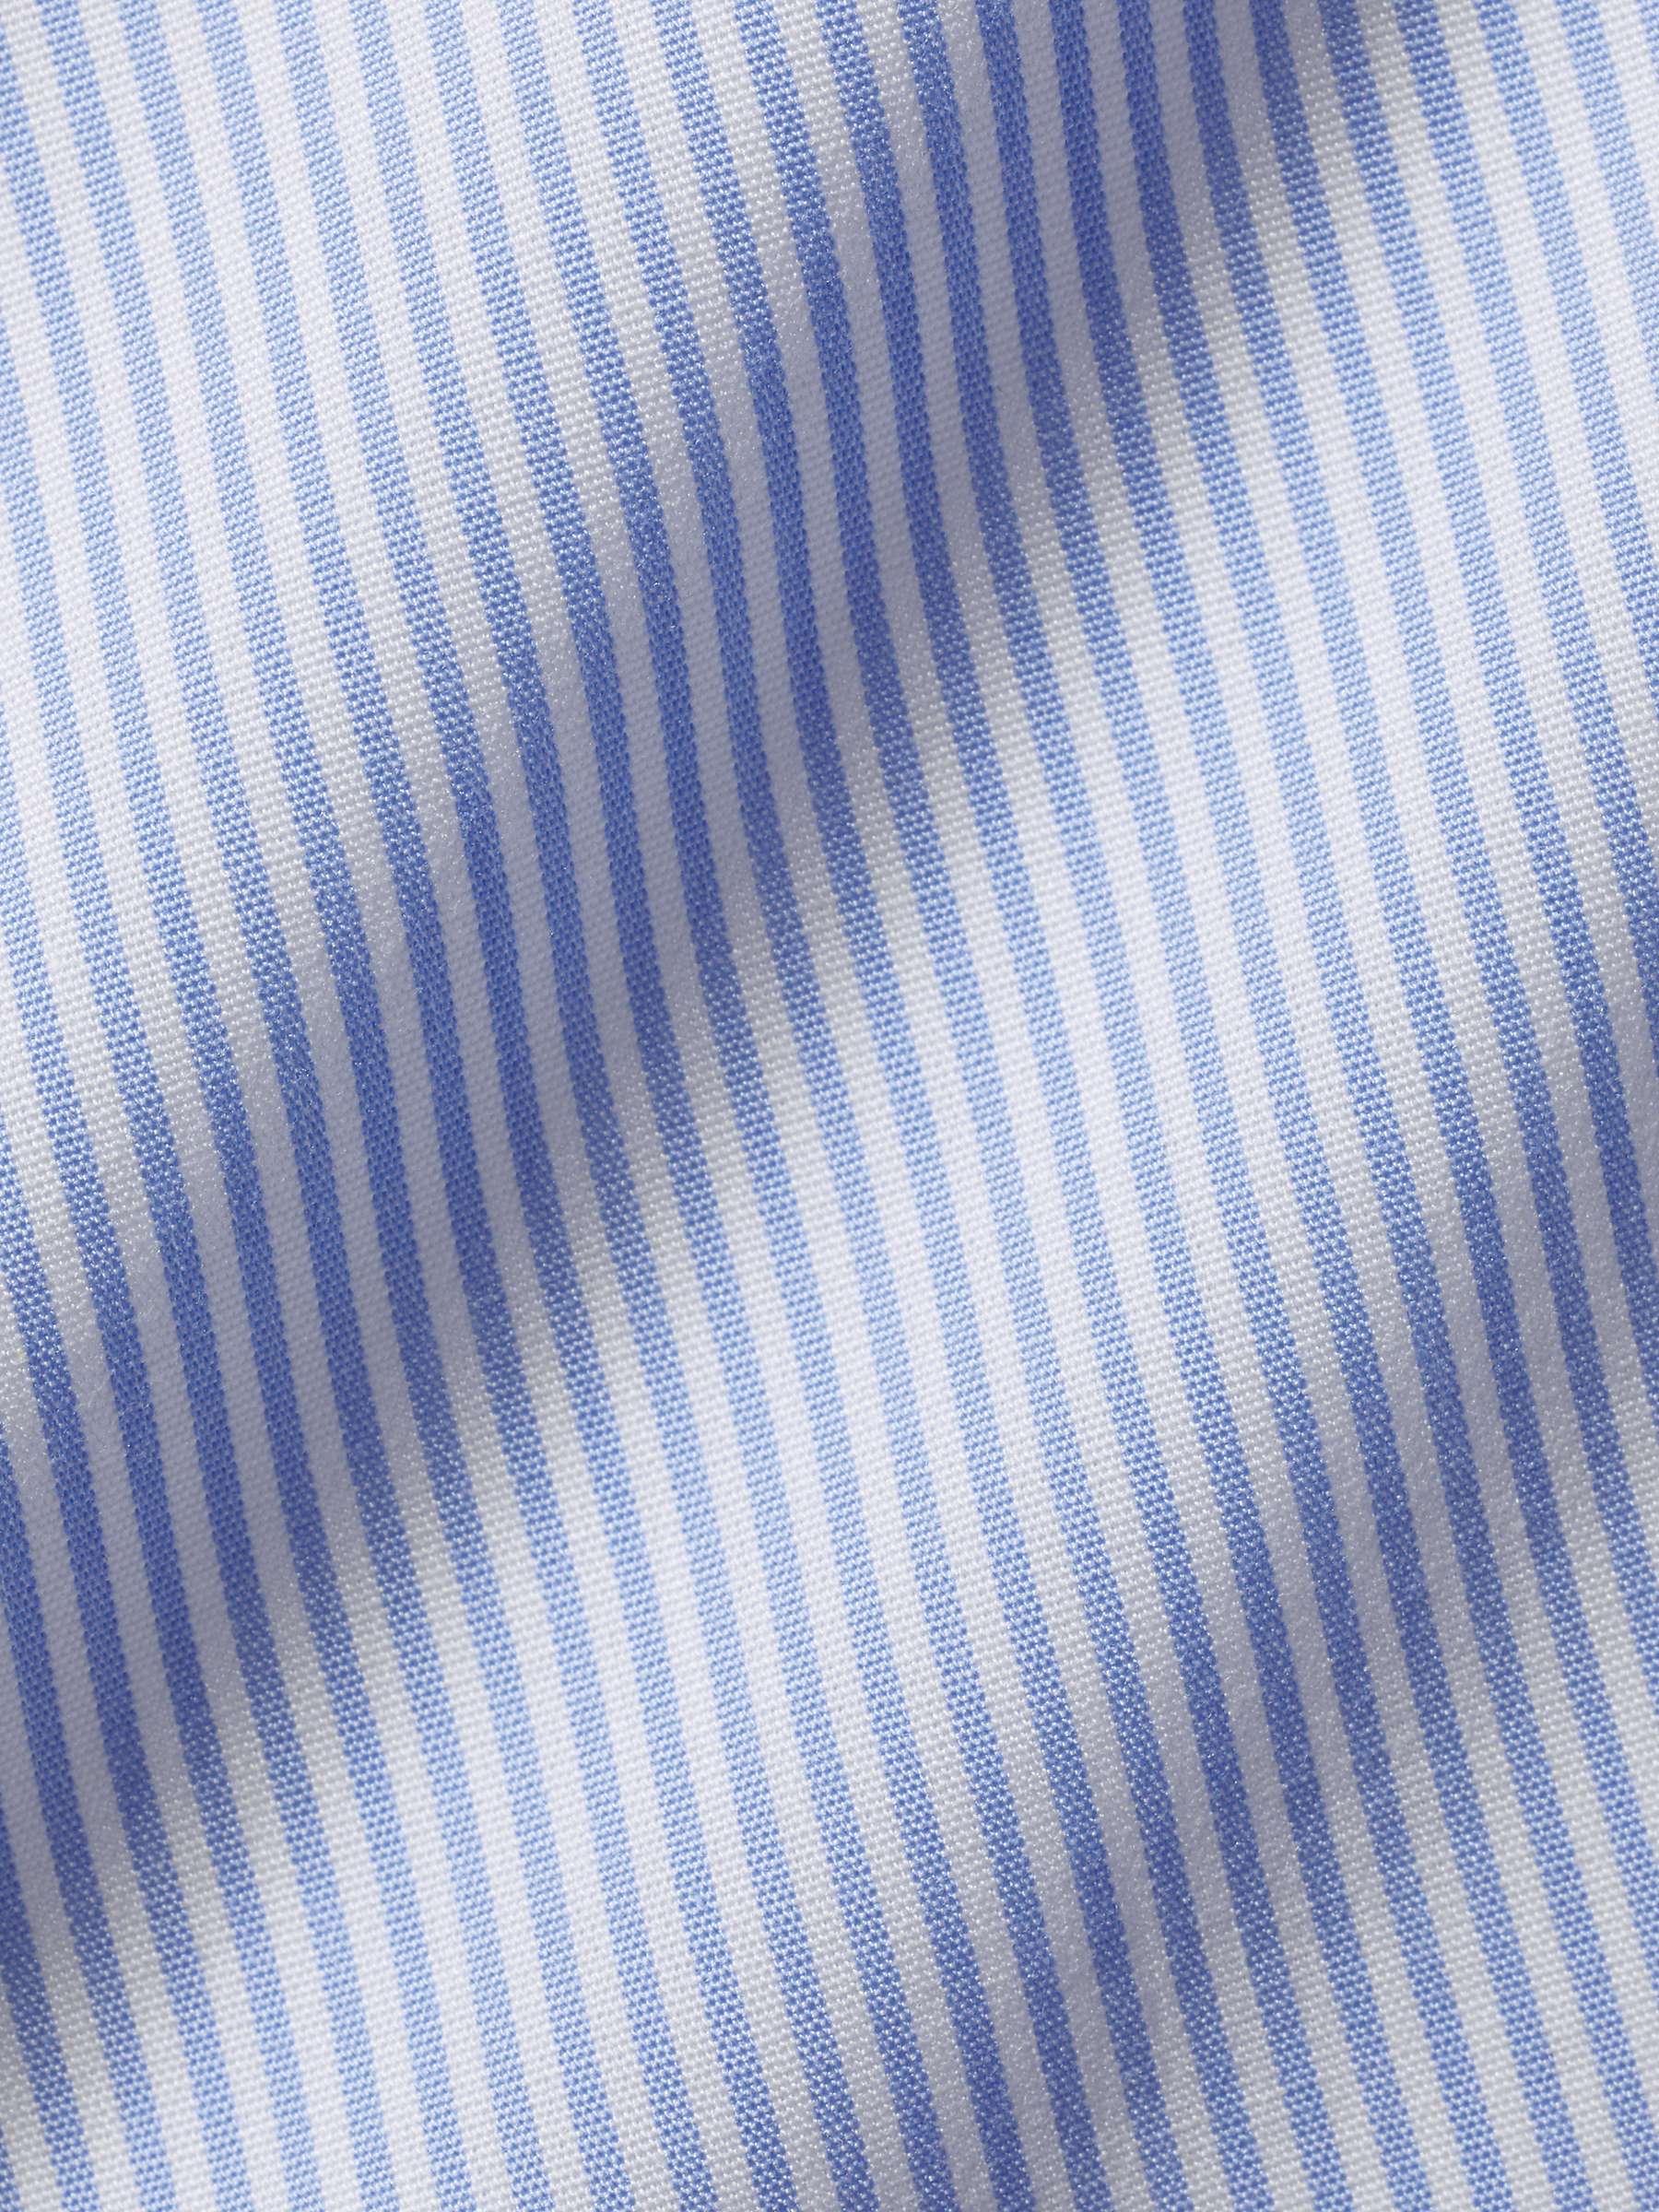 Buy Charles Tyrwhitt Winchesters Stripe Non-Iron Shirt Online at johnlewis.com